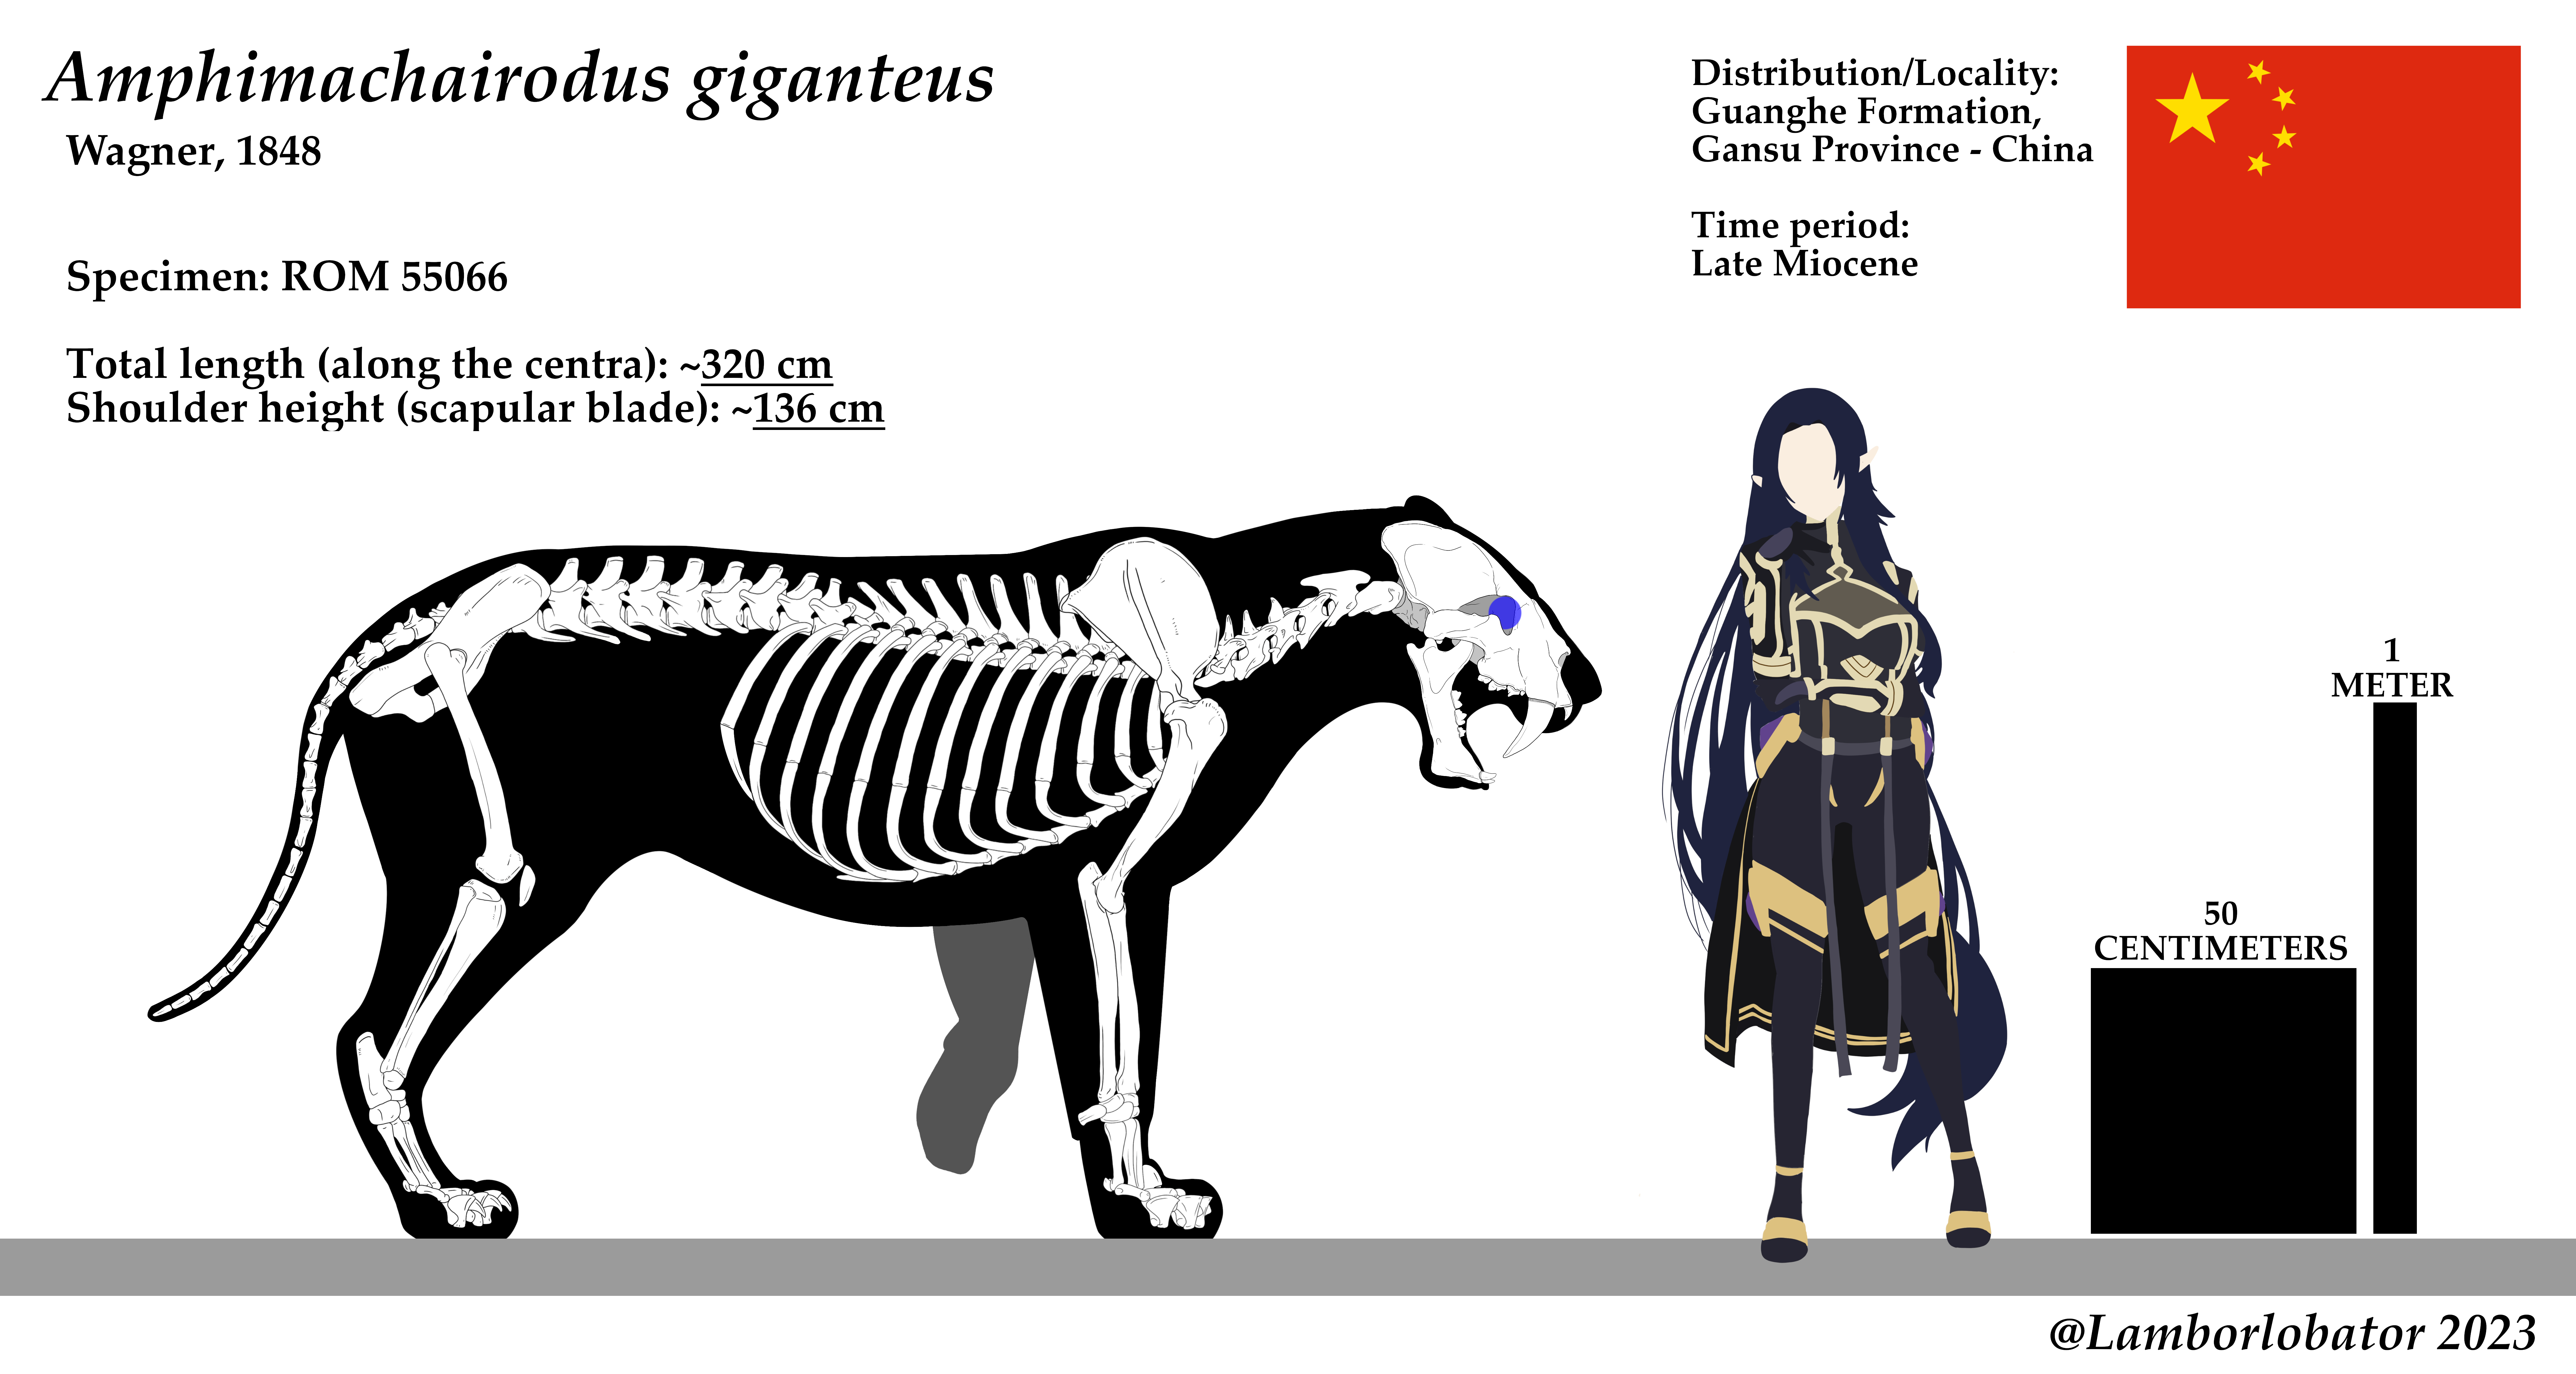 Sarkastodon and Bengal tiger (size comparison) by Rom-u on DeviantArt